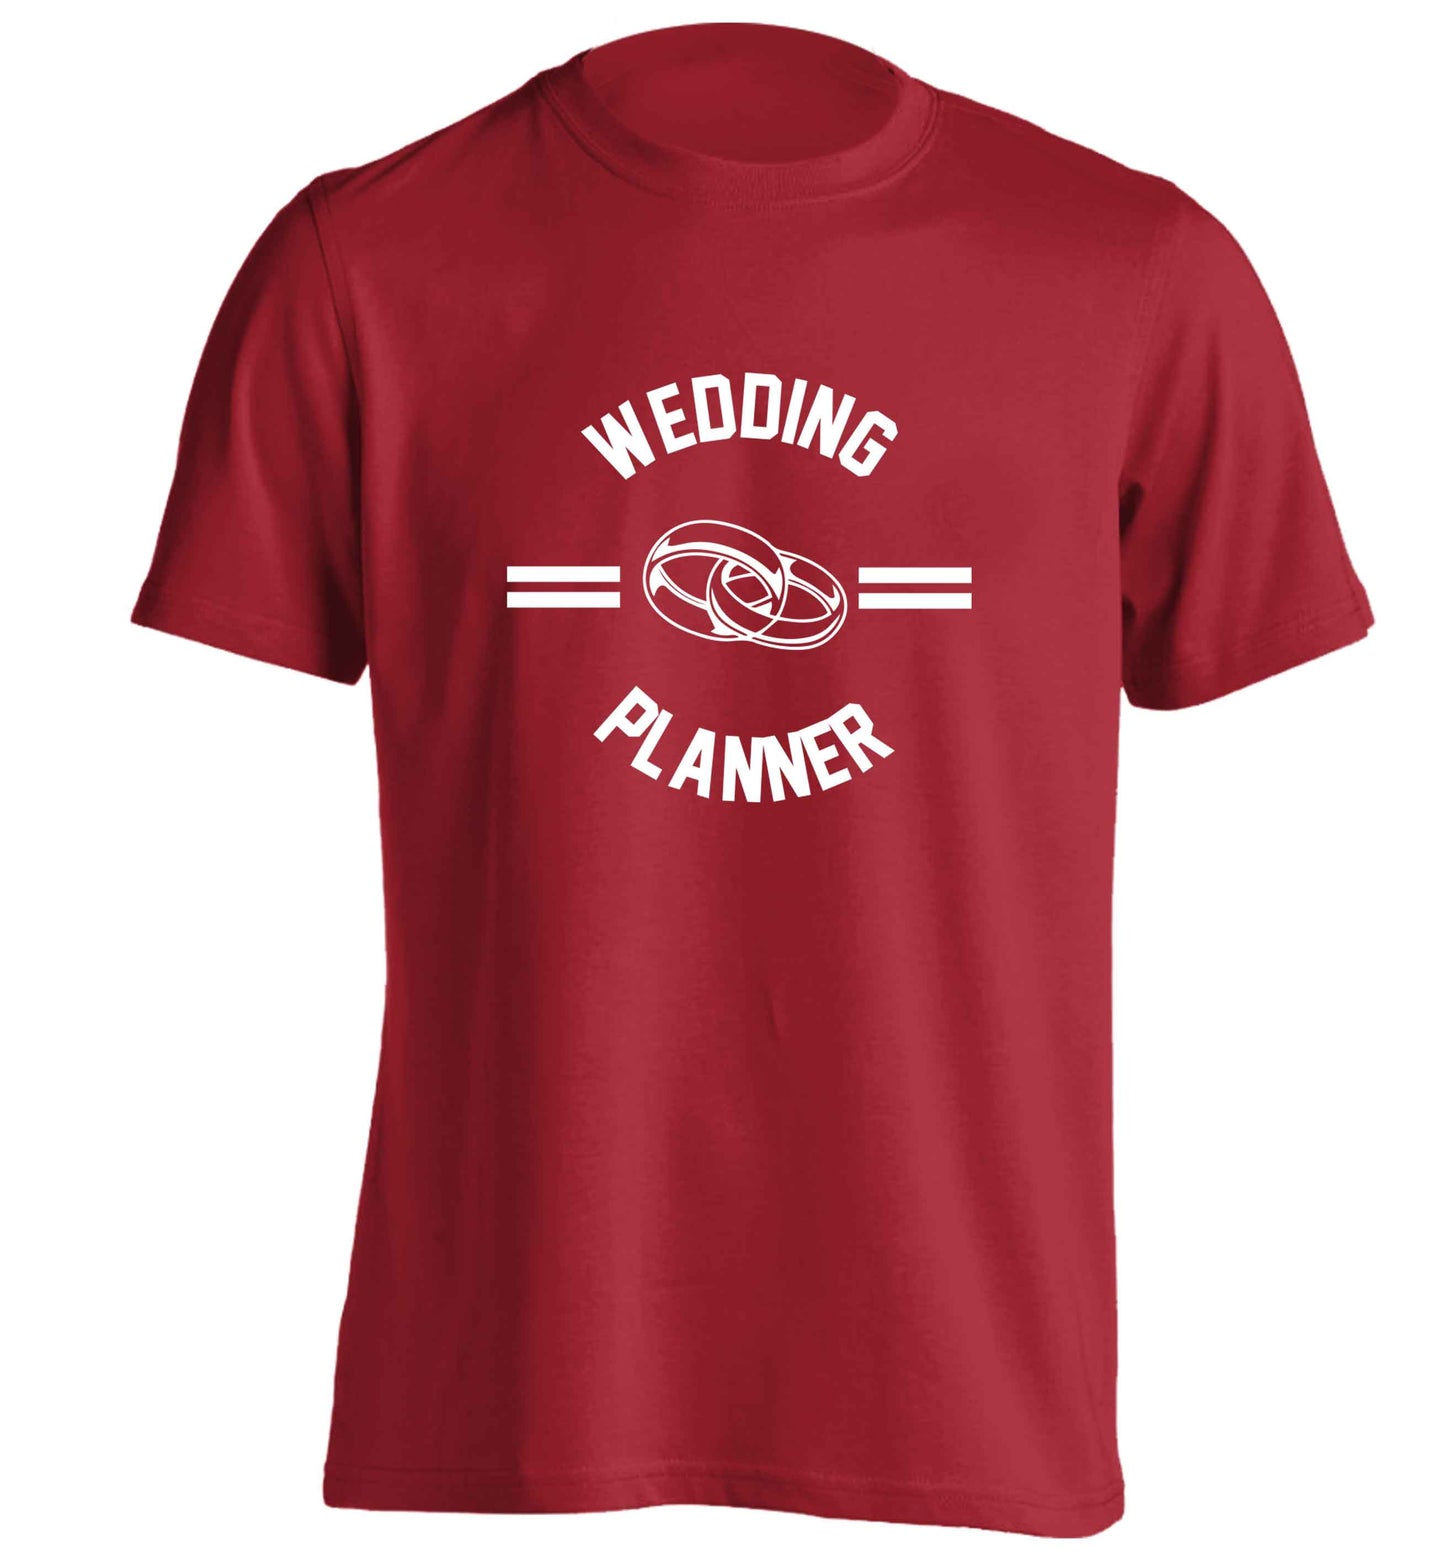 Wedding planner adults unisex red Tshirt 2XL